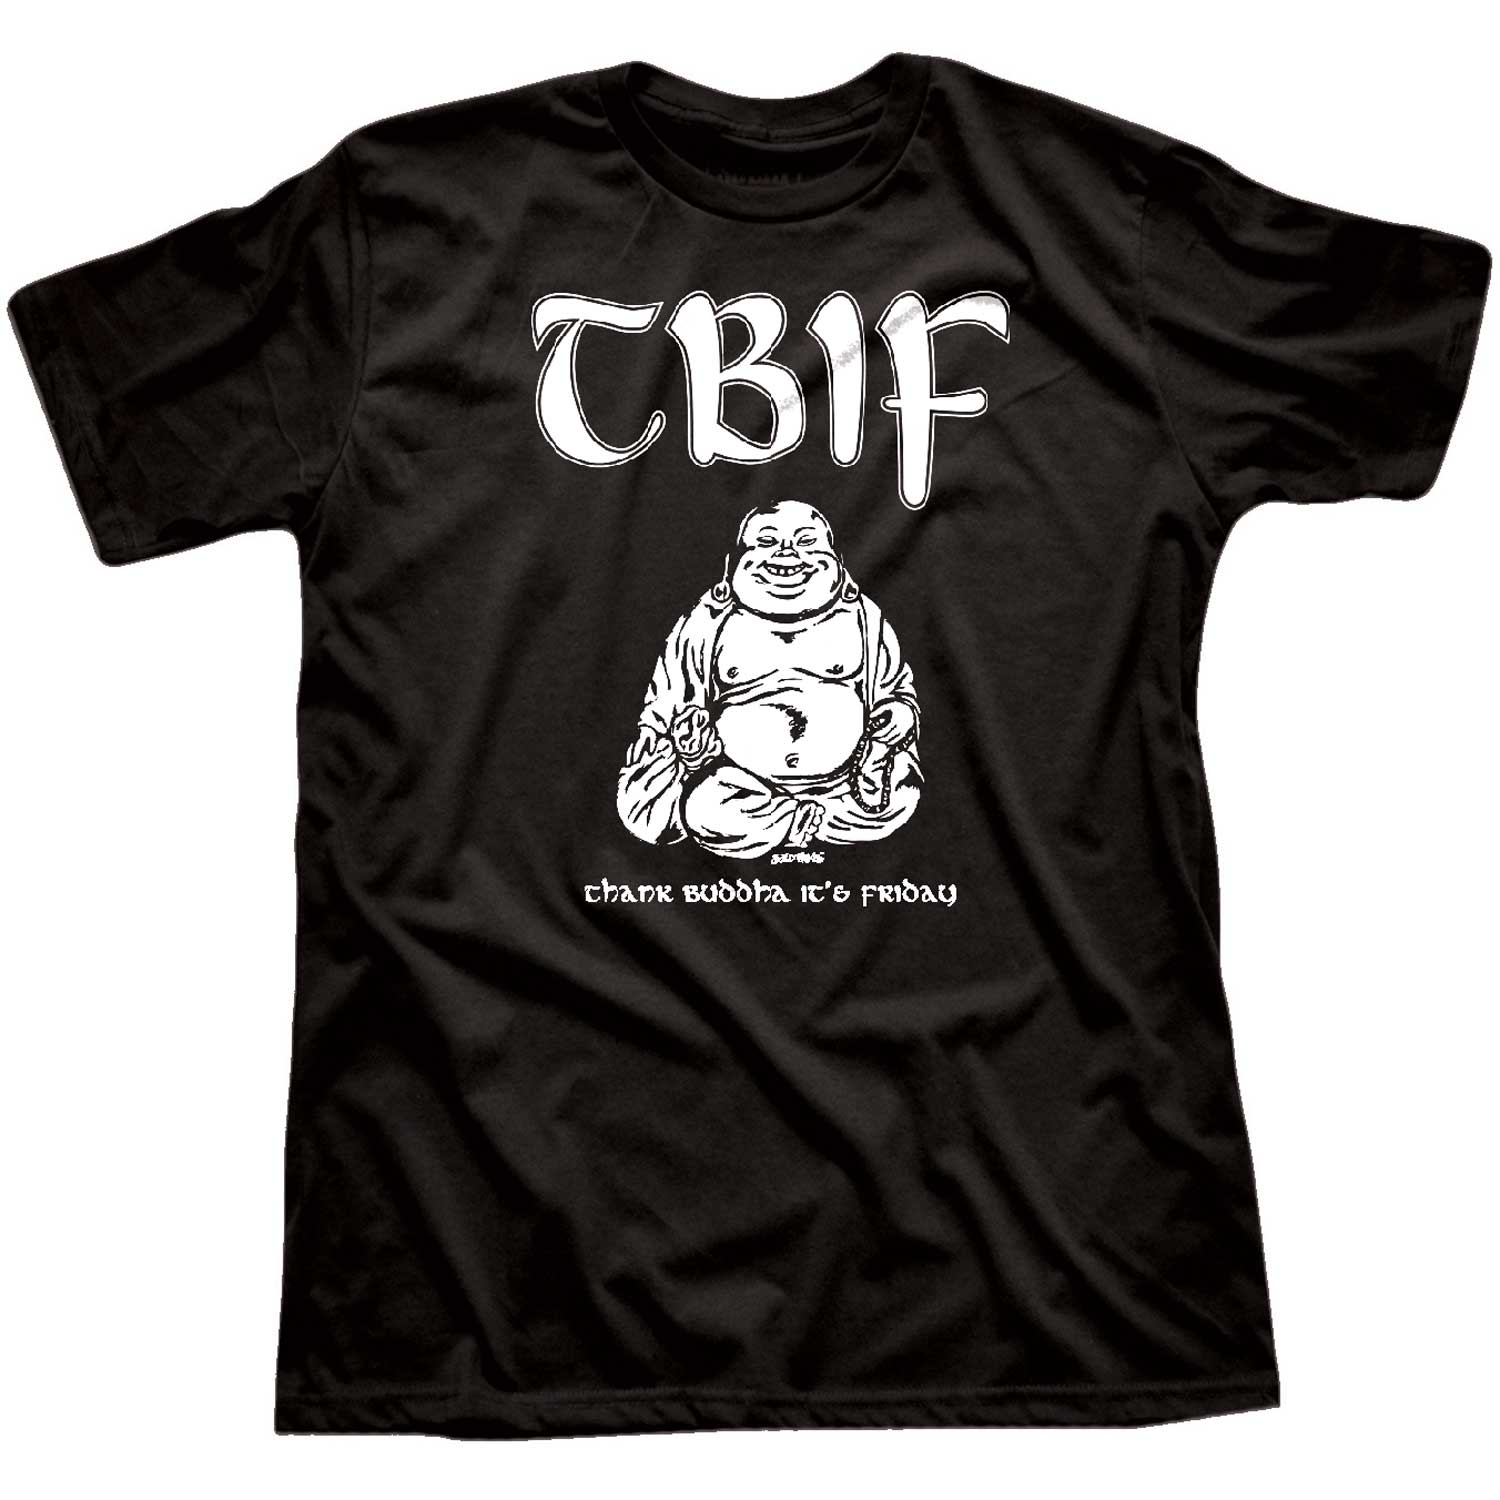 Men's Thank Buddha It's Friday Vintage Graphic T-Shirt | Funny Blackwash Yogi Tee | Solid Threads